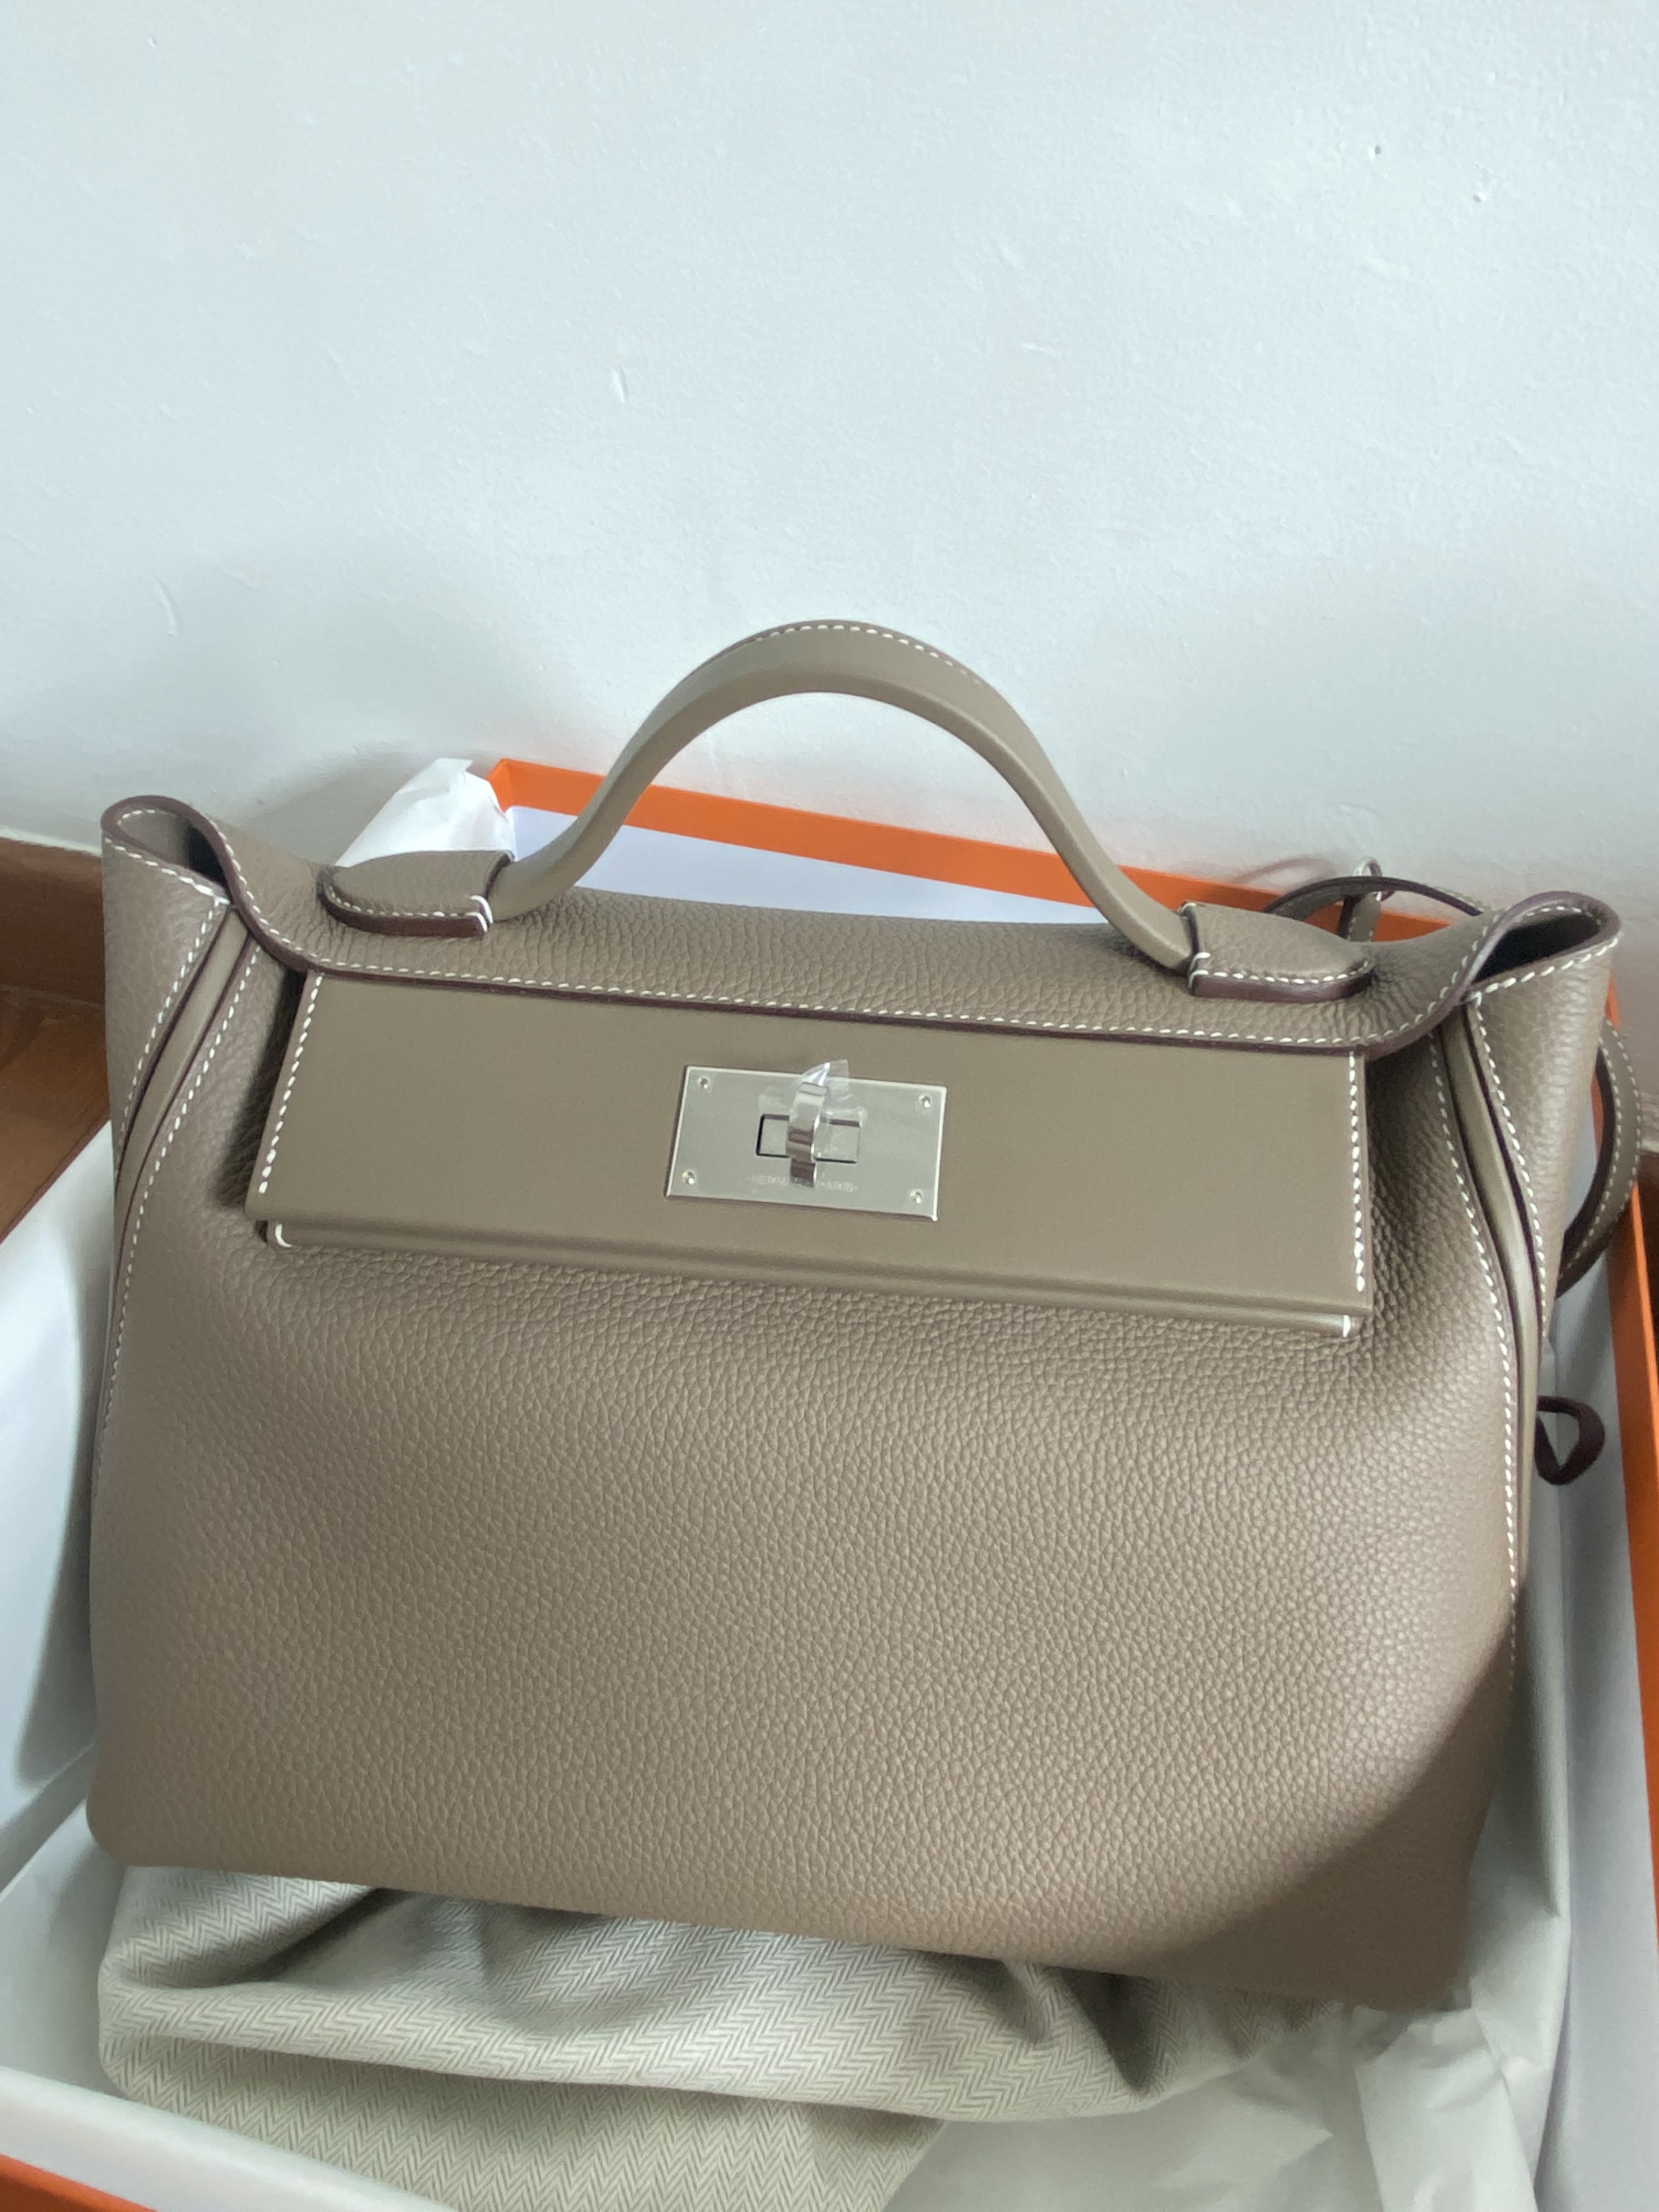 Hermes Sac 2424 Womens Handbags, Grey, Free